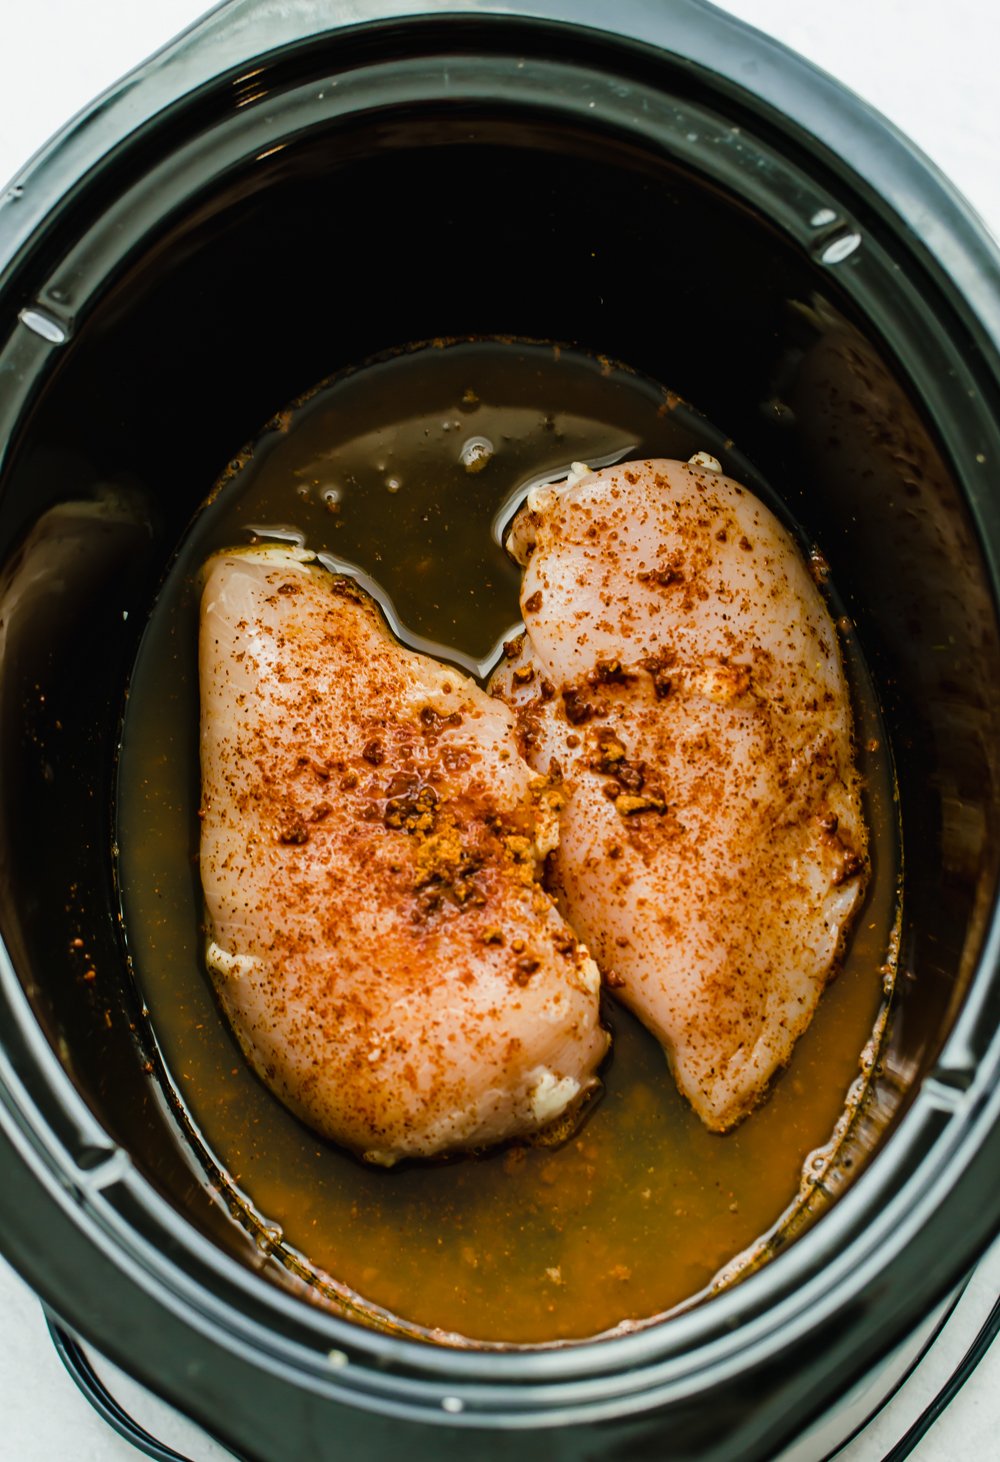 Raw seasoned chicken in a slow cooker; one of many crockpot freezer meals